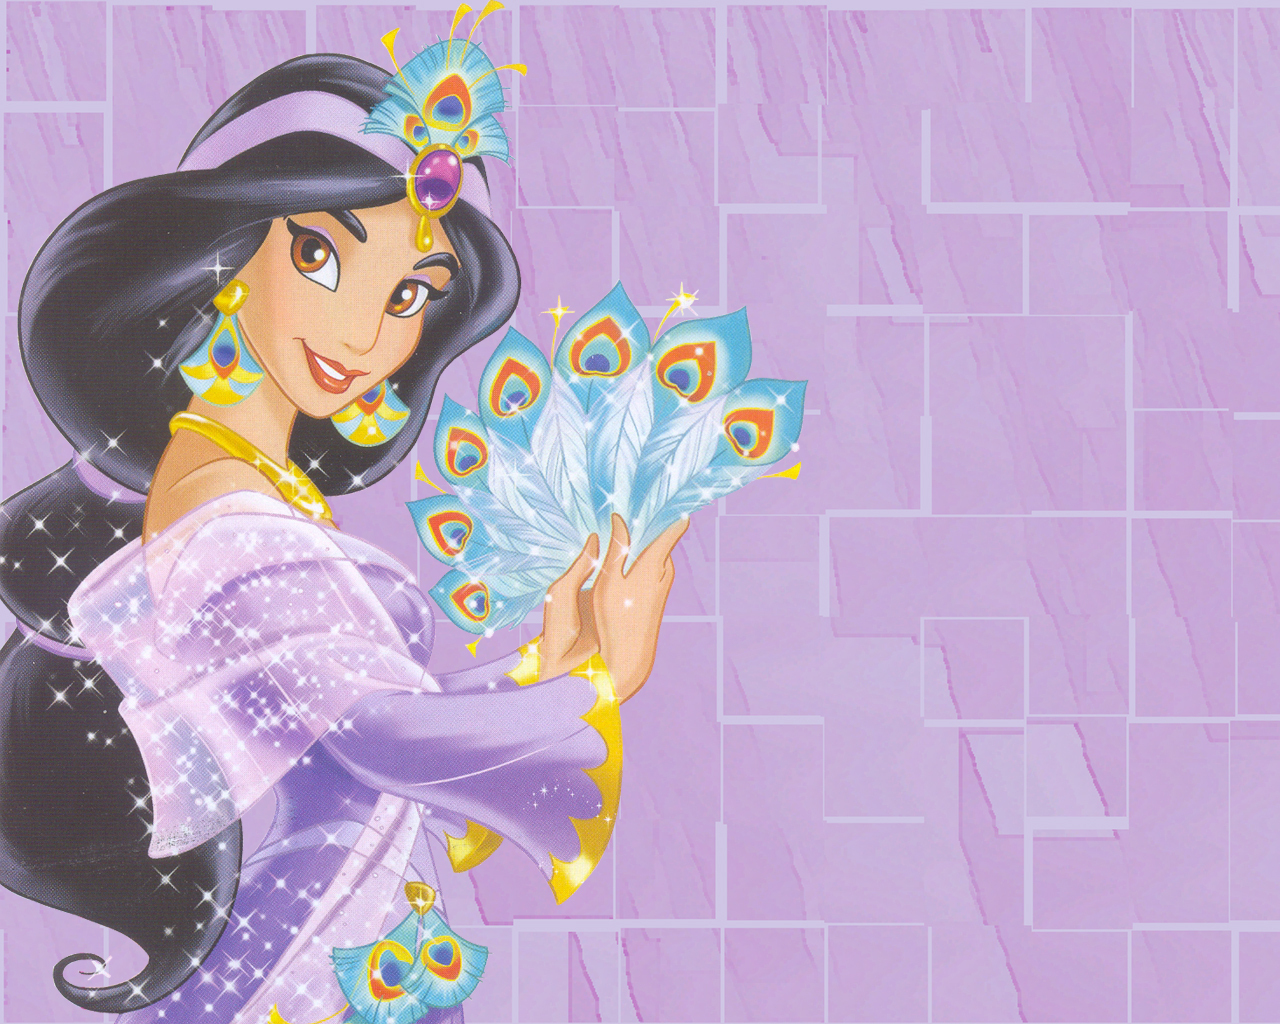 Princess Jasmine Disney Wallpaper